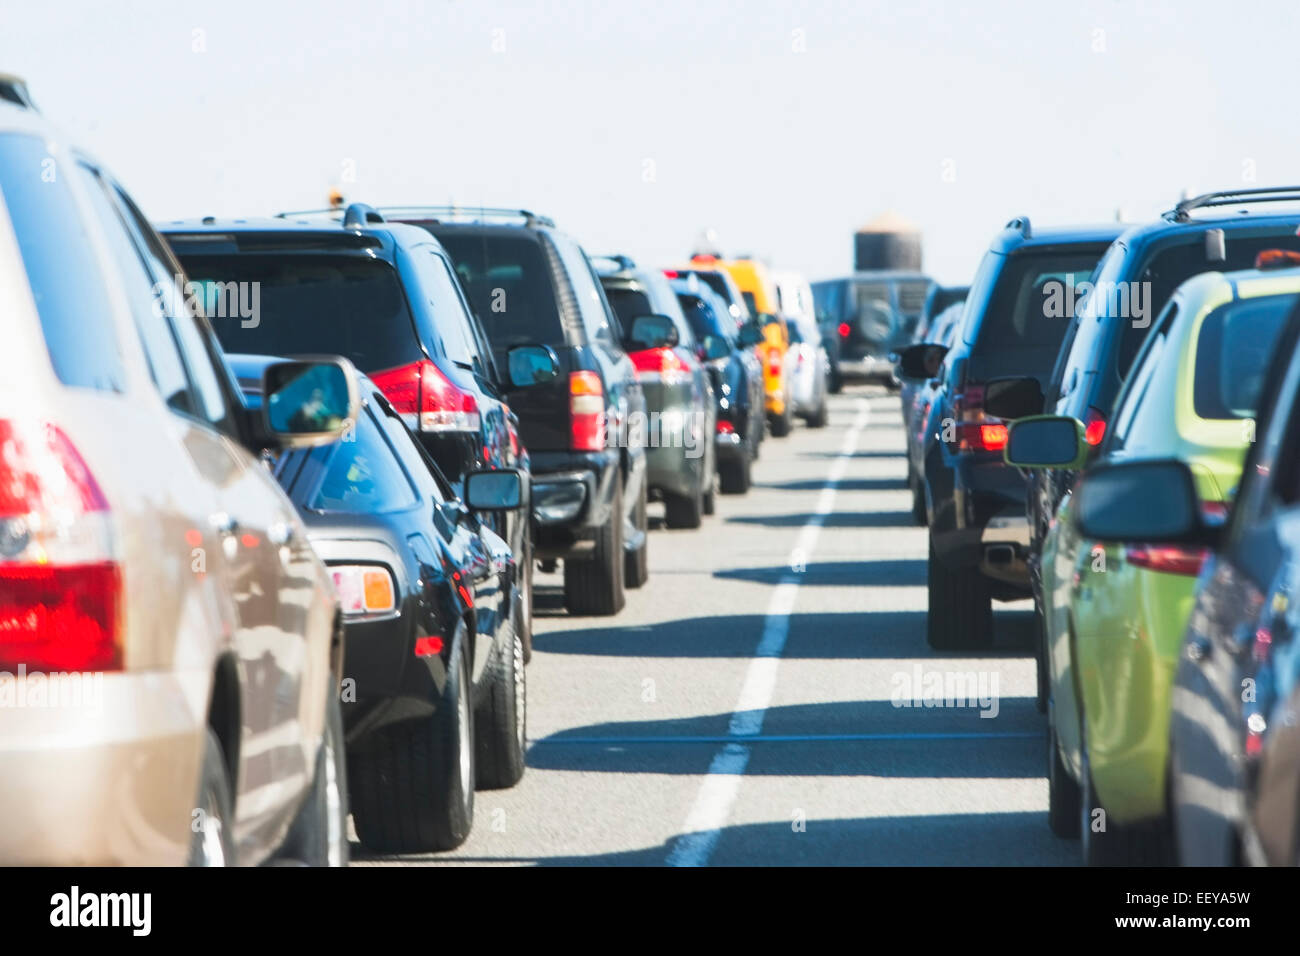 USA, New York State, New York City, Cars in traffic jam Stock Photo